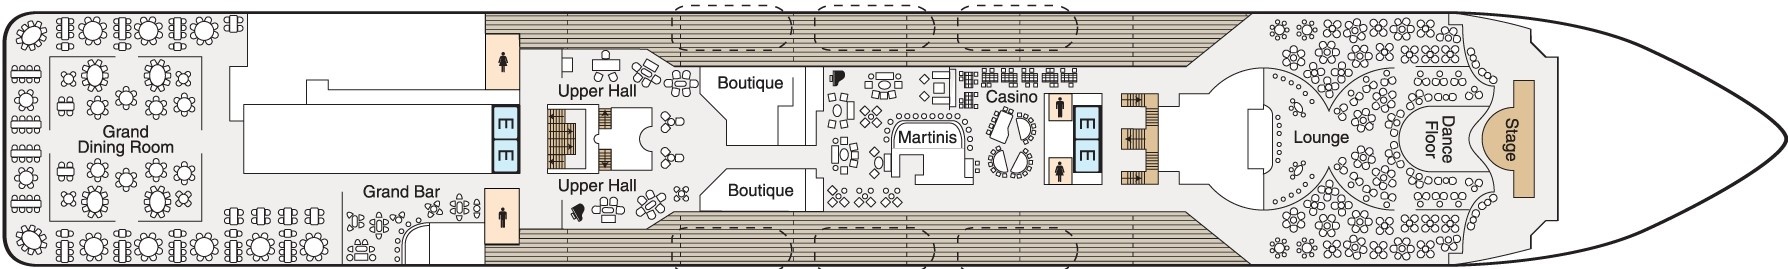 Планы палуб Regatta: Палуба 5